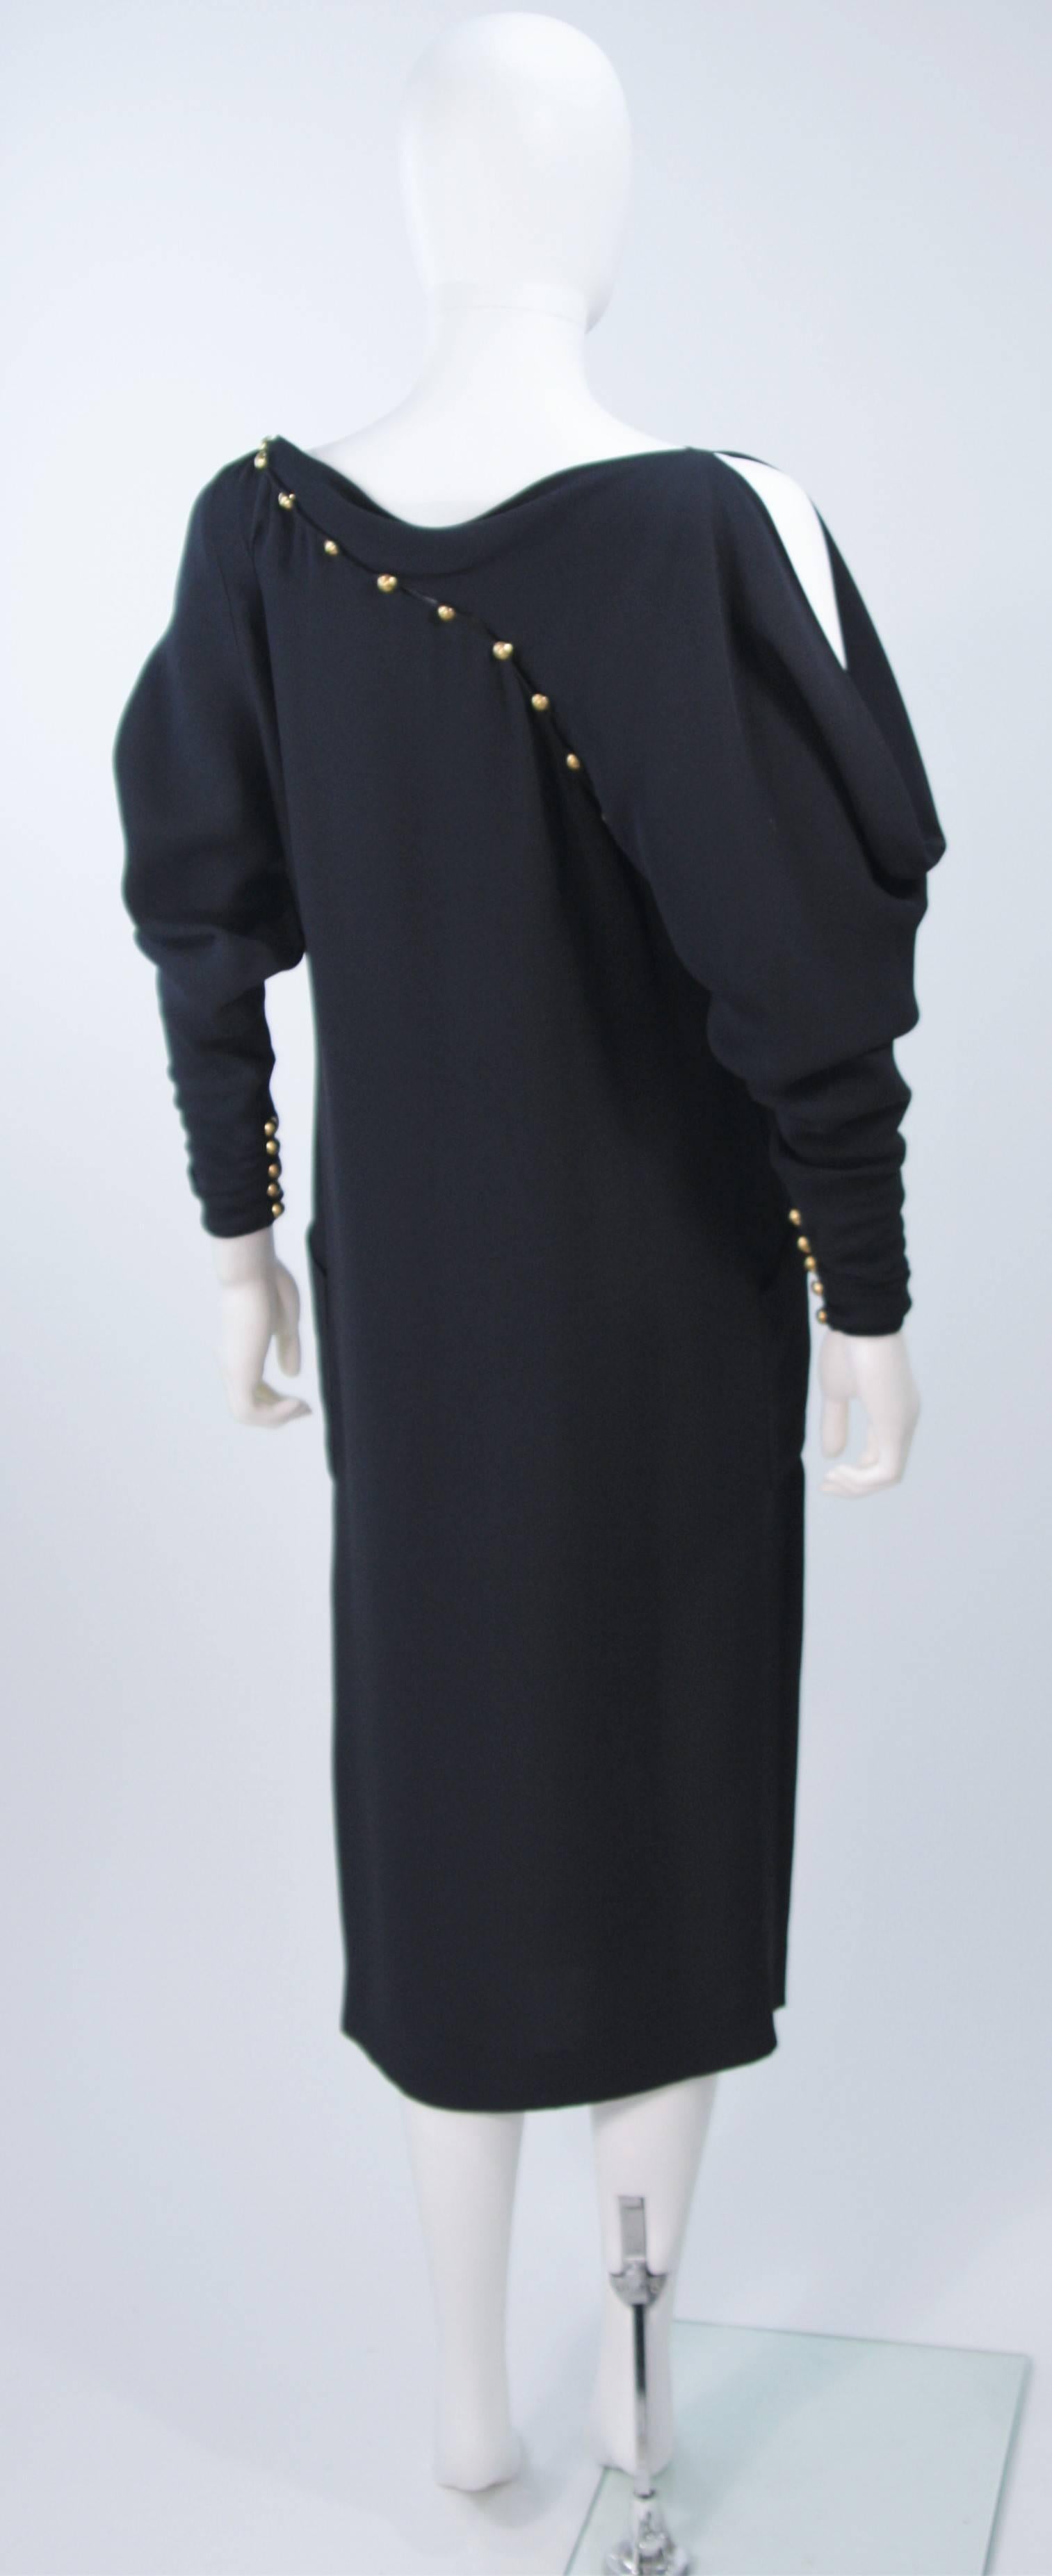 KARL LAGERFELD Circa 1980s Navy Asymmetrical Off The Shoulder Silk Dress Size 38 1